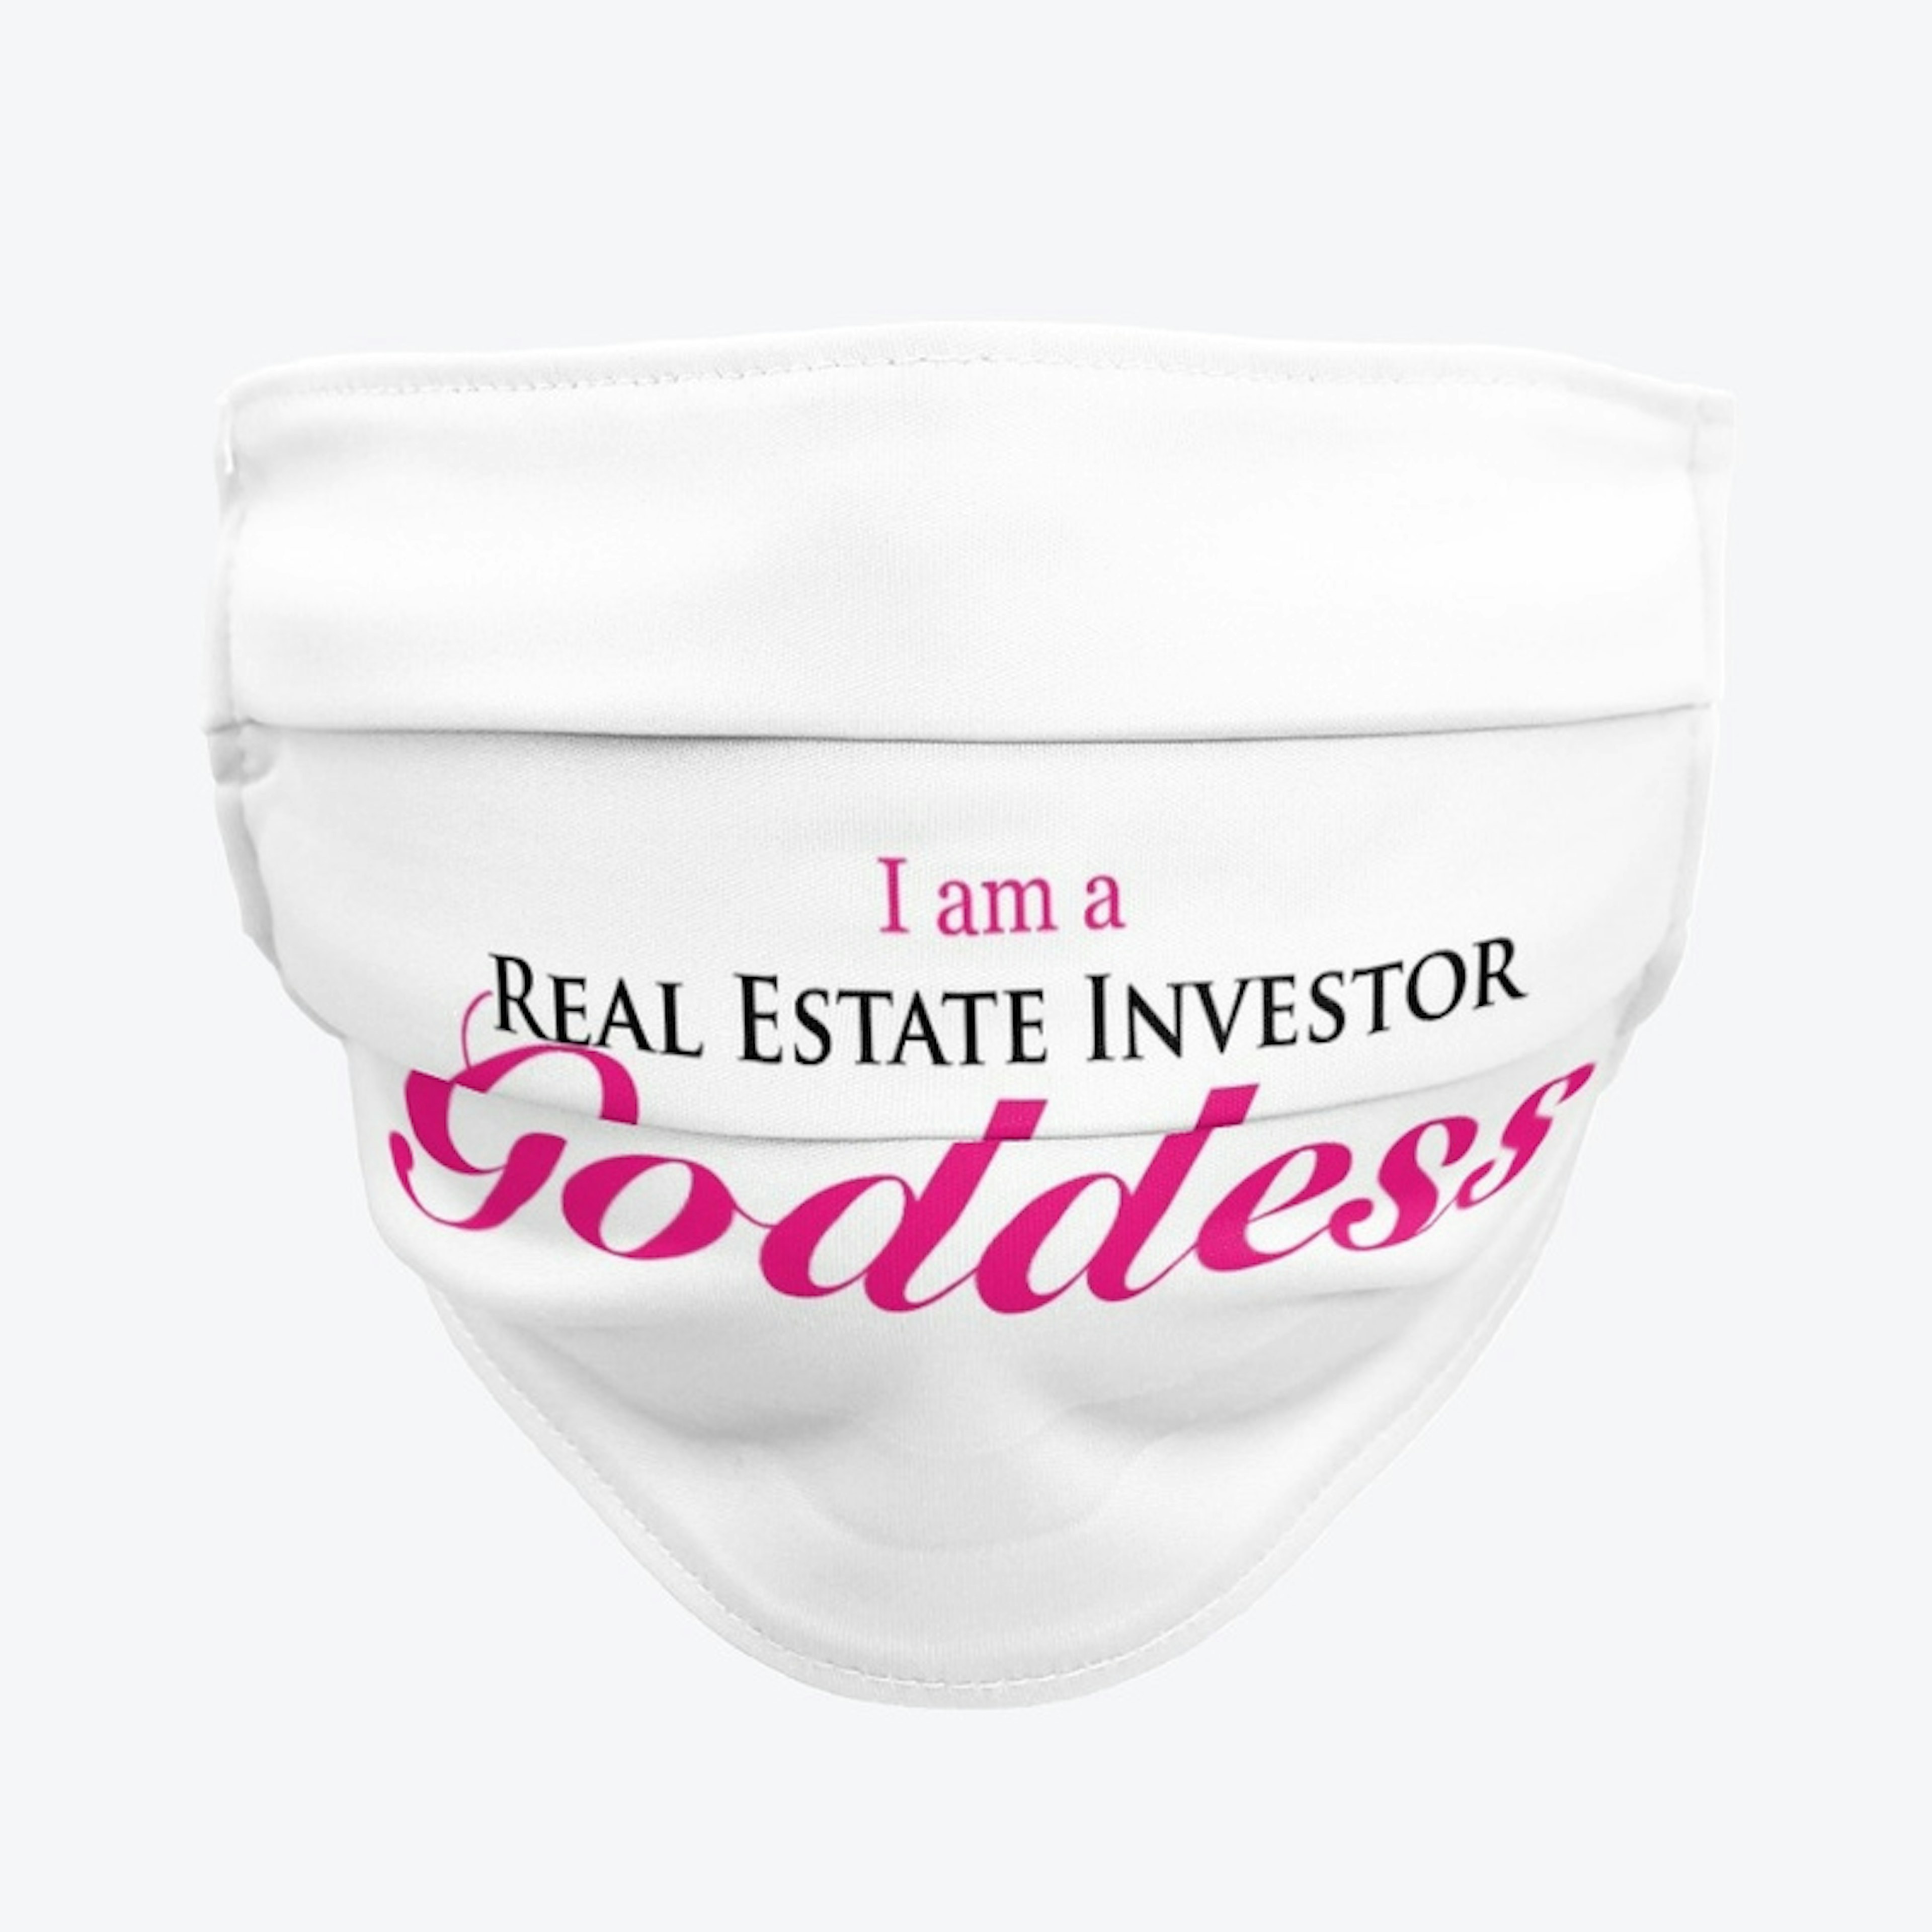 I am a Real Estate Investor Goddess